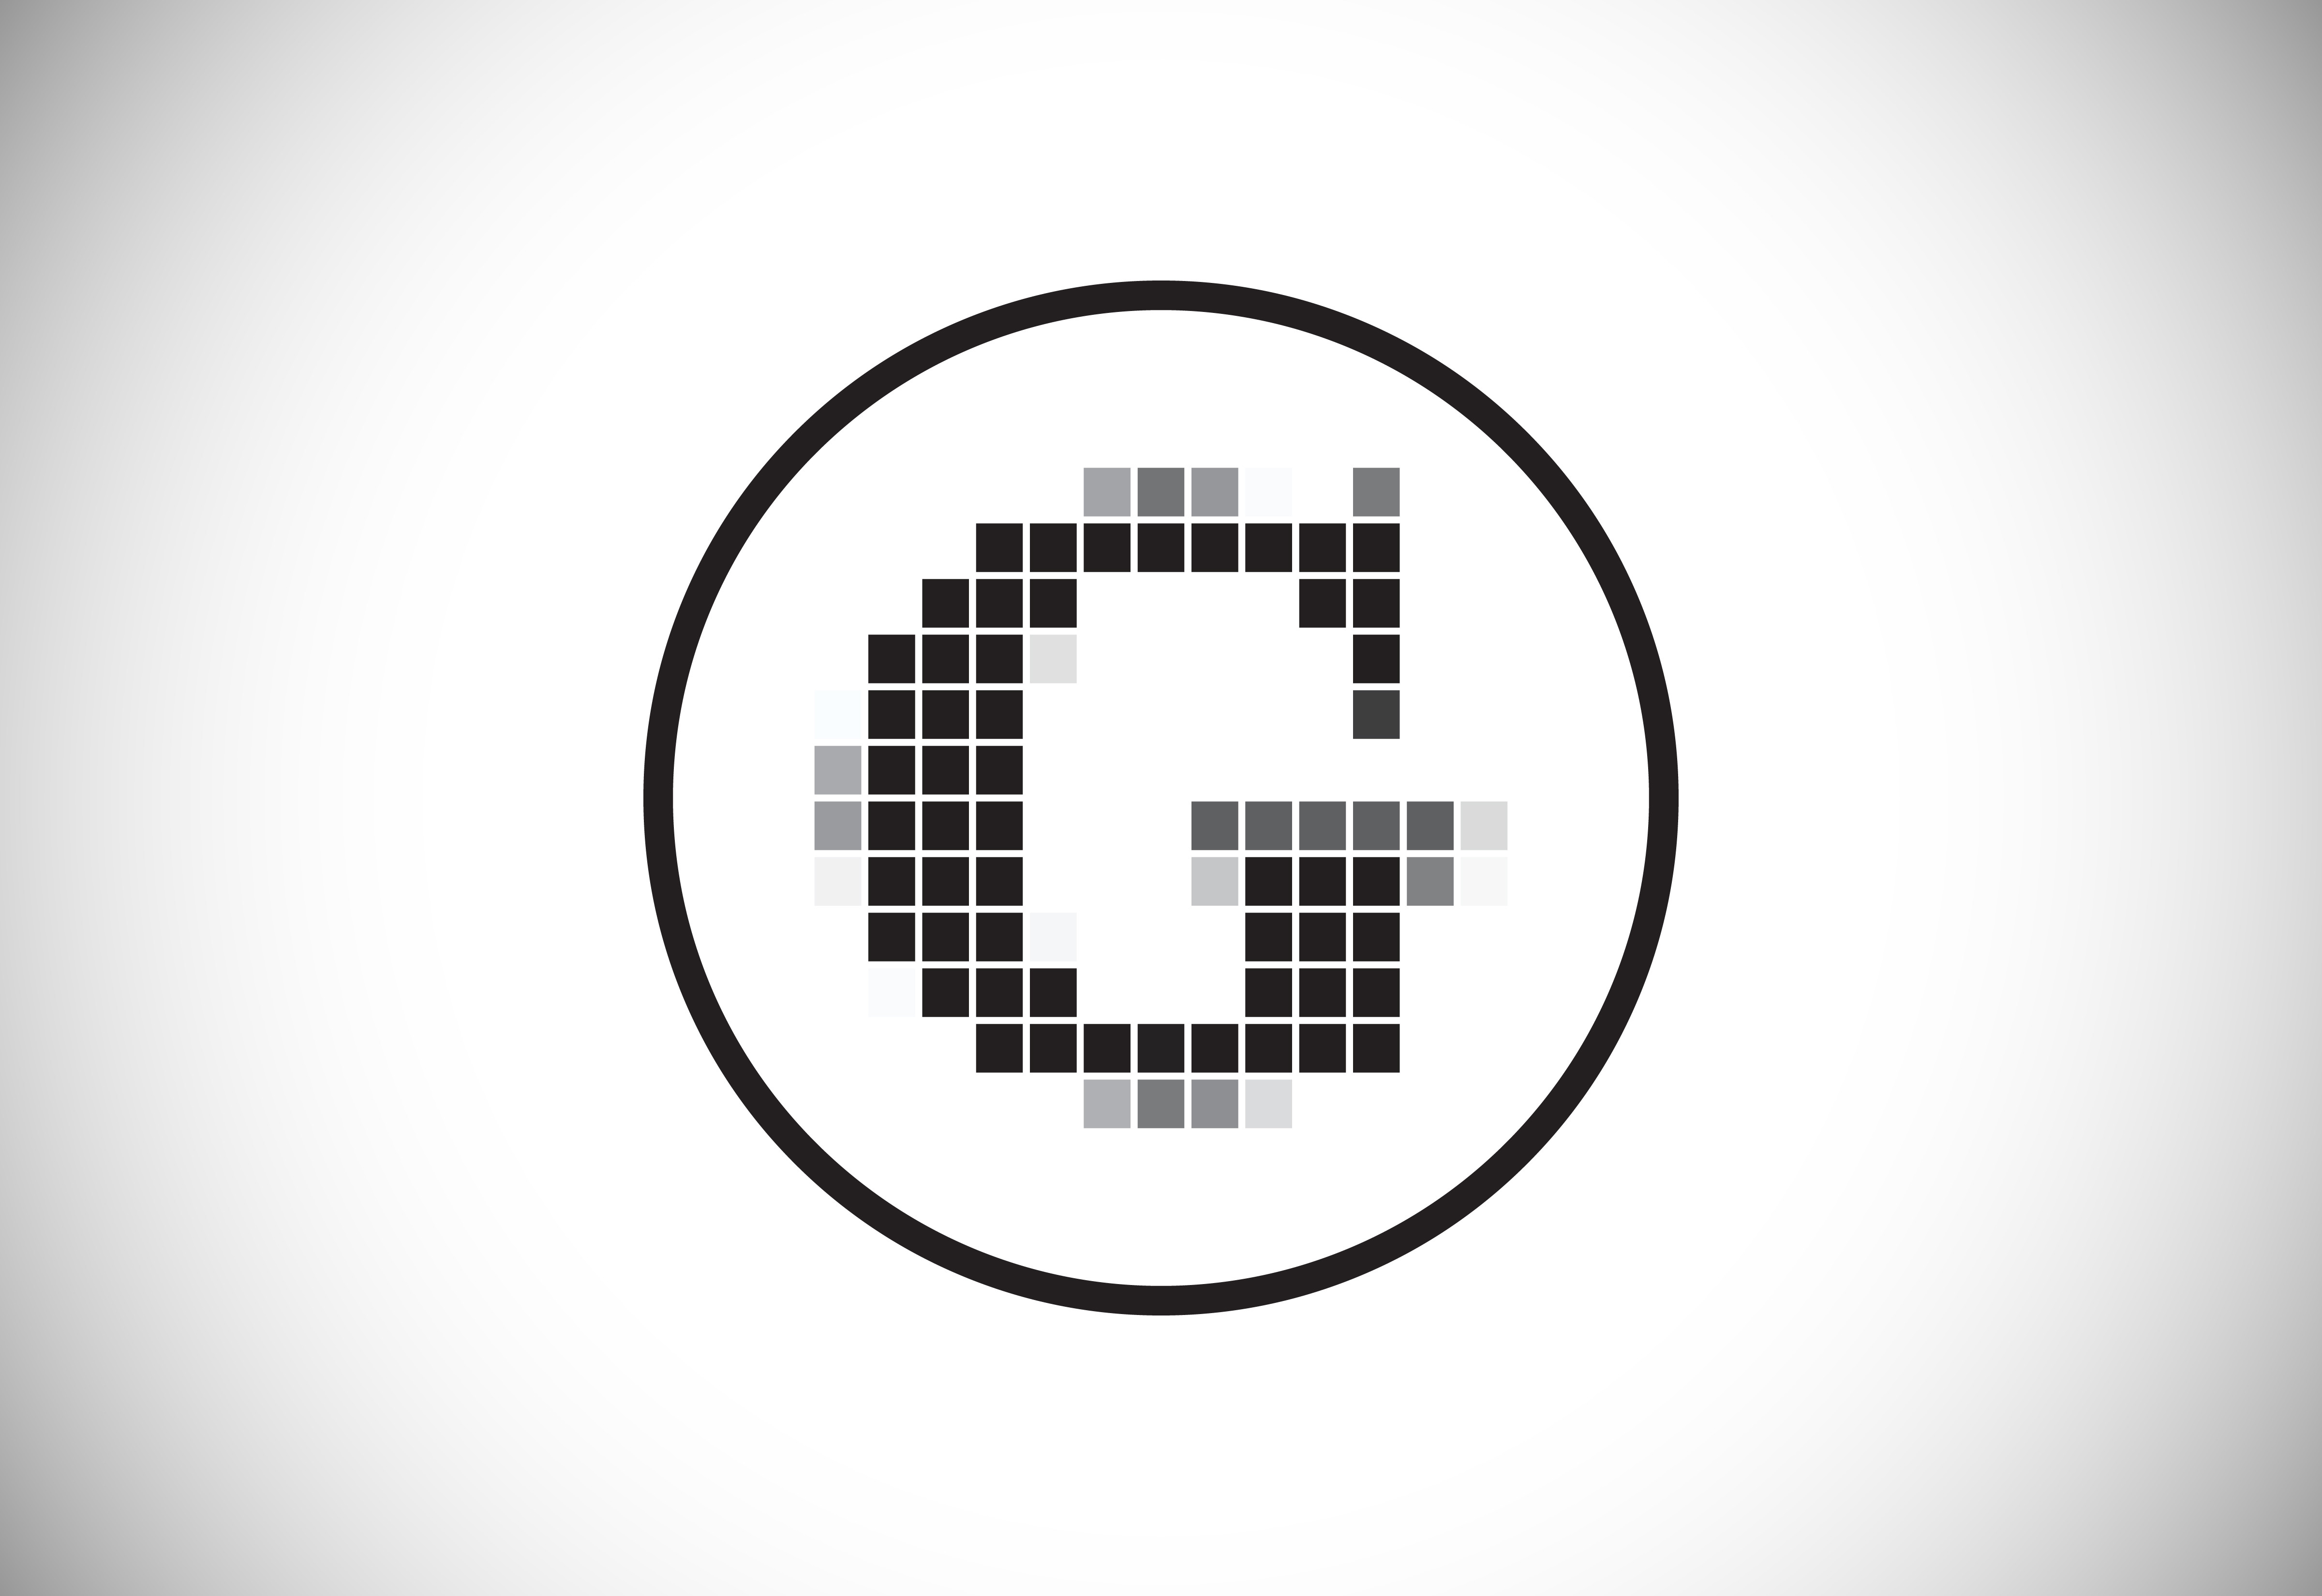 Letter GM Monogram Logo Graphic by prayogack · Creative Fabrica